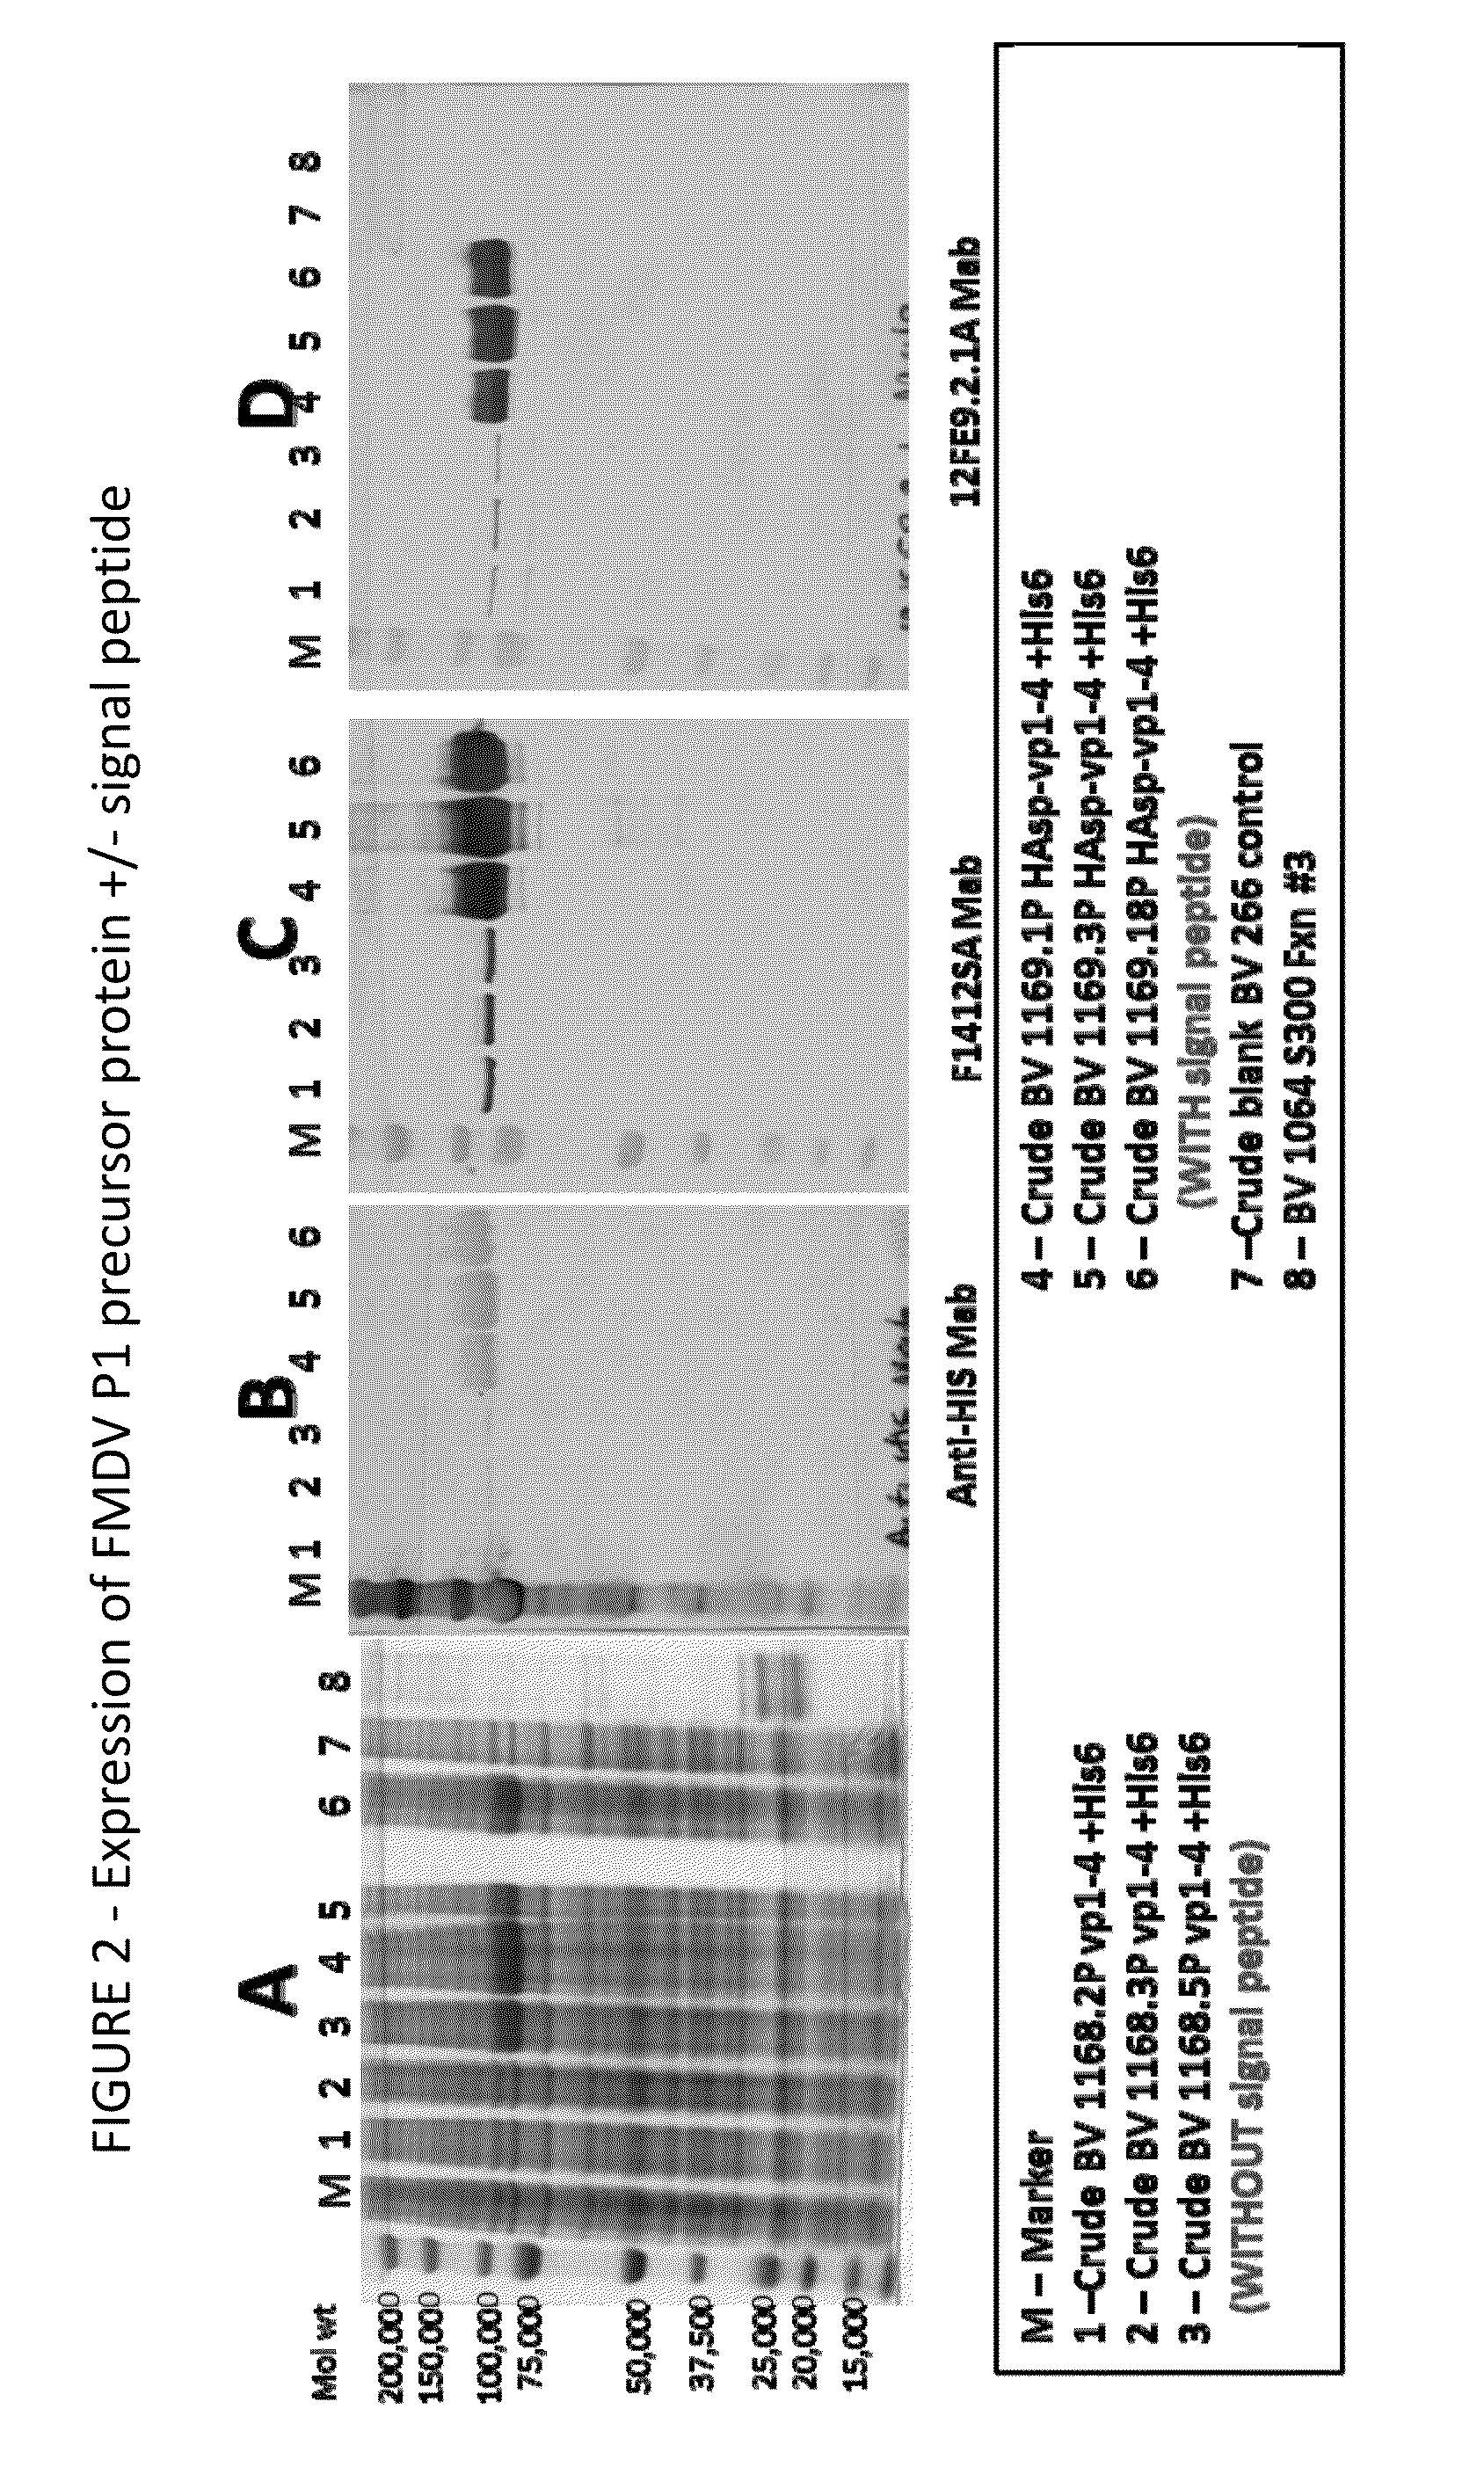 Enhanced expression of picornavirus proteins